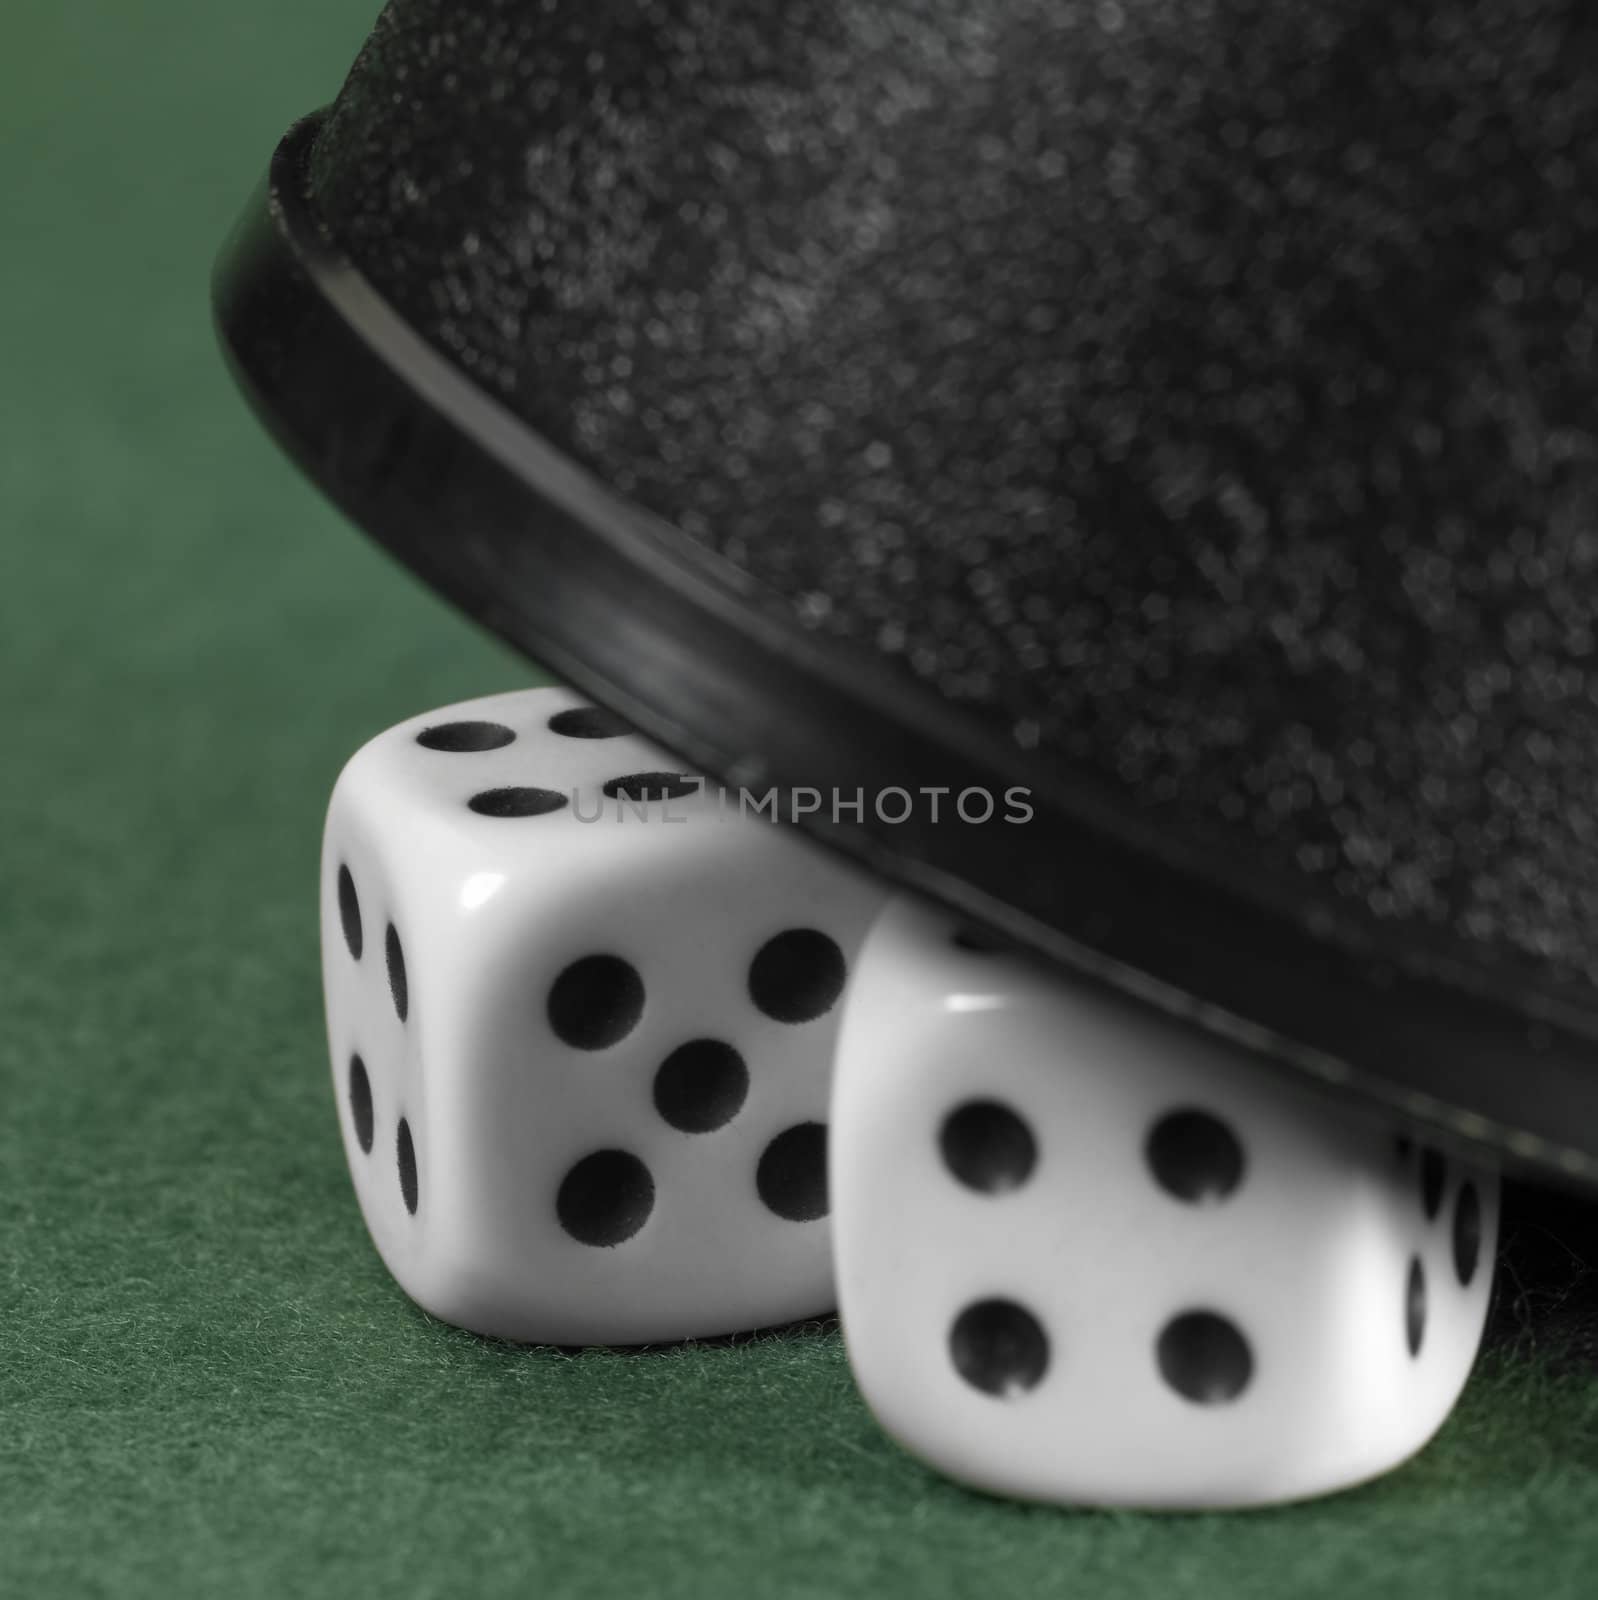 2 half hidden dice and cup closeup on green felt